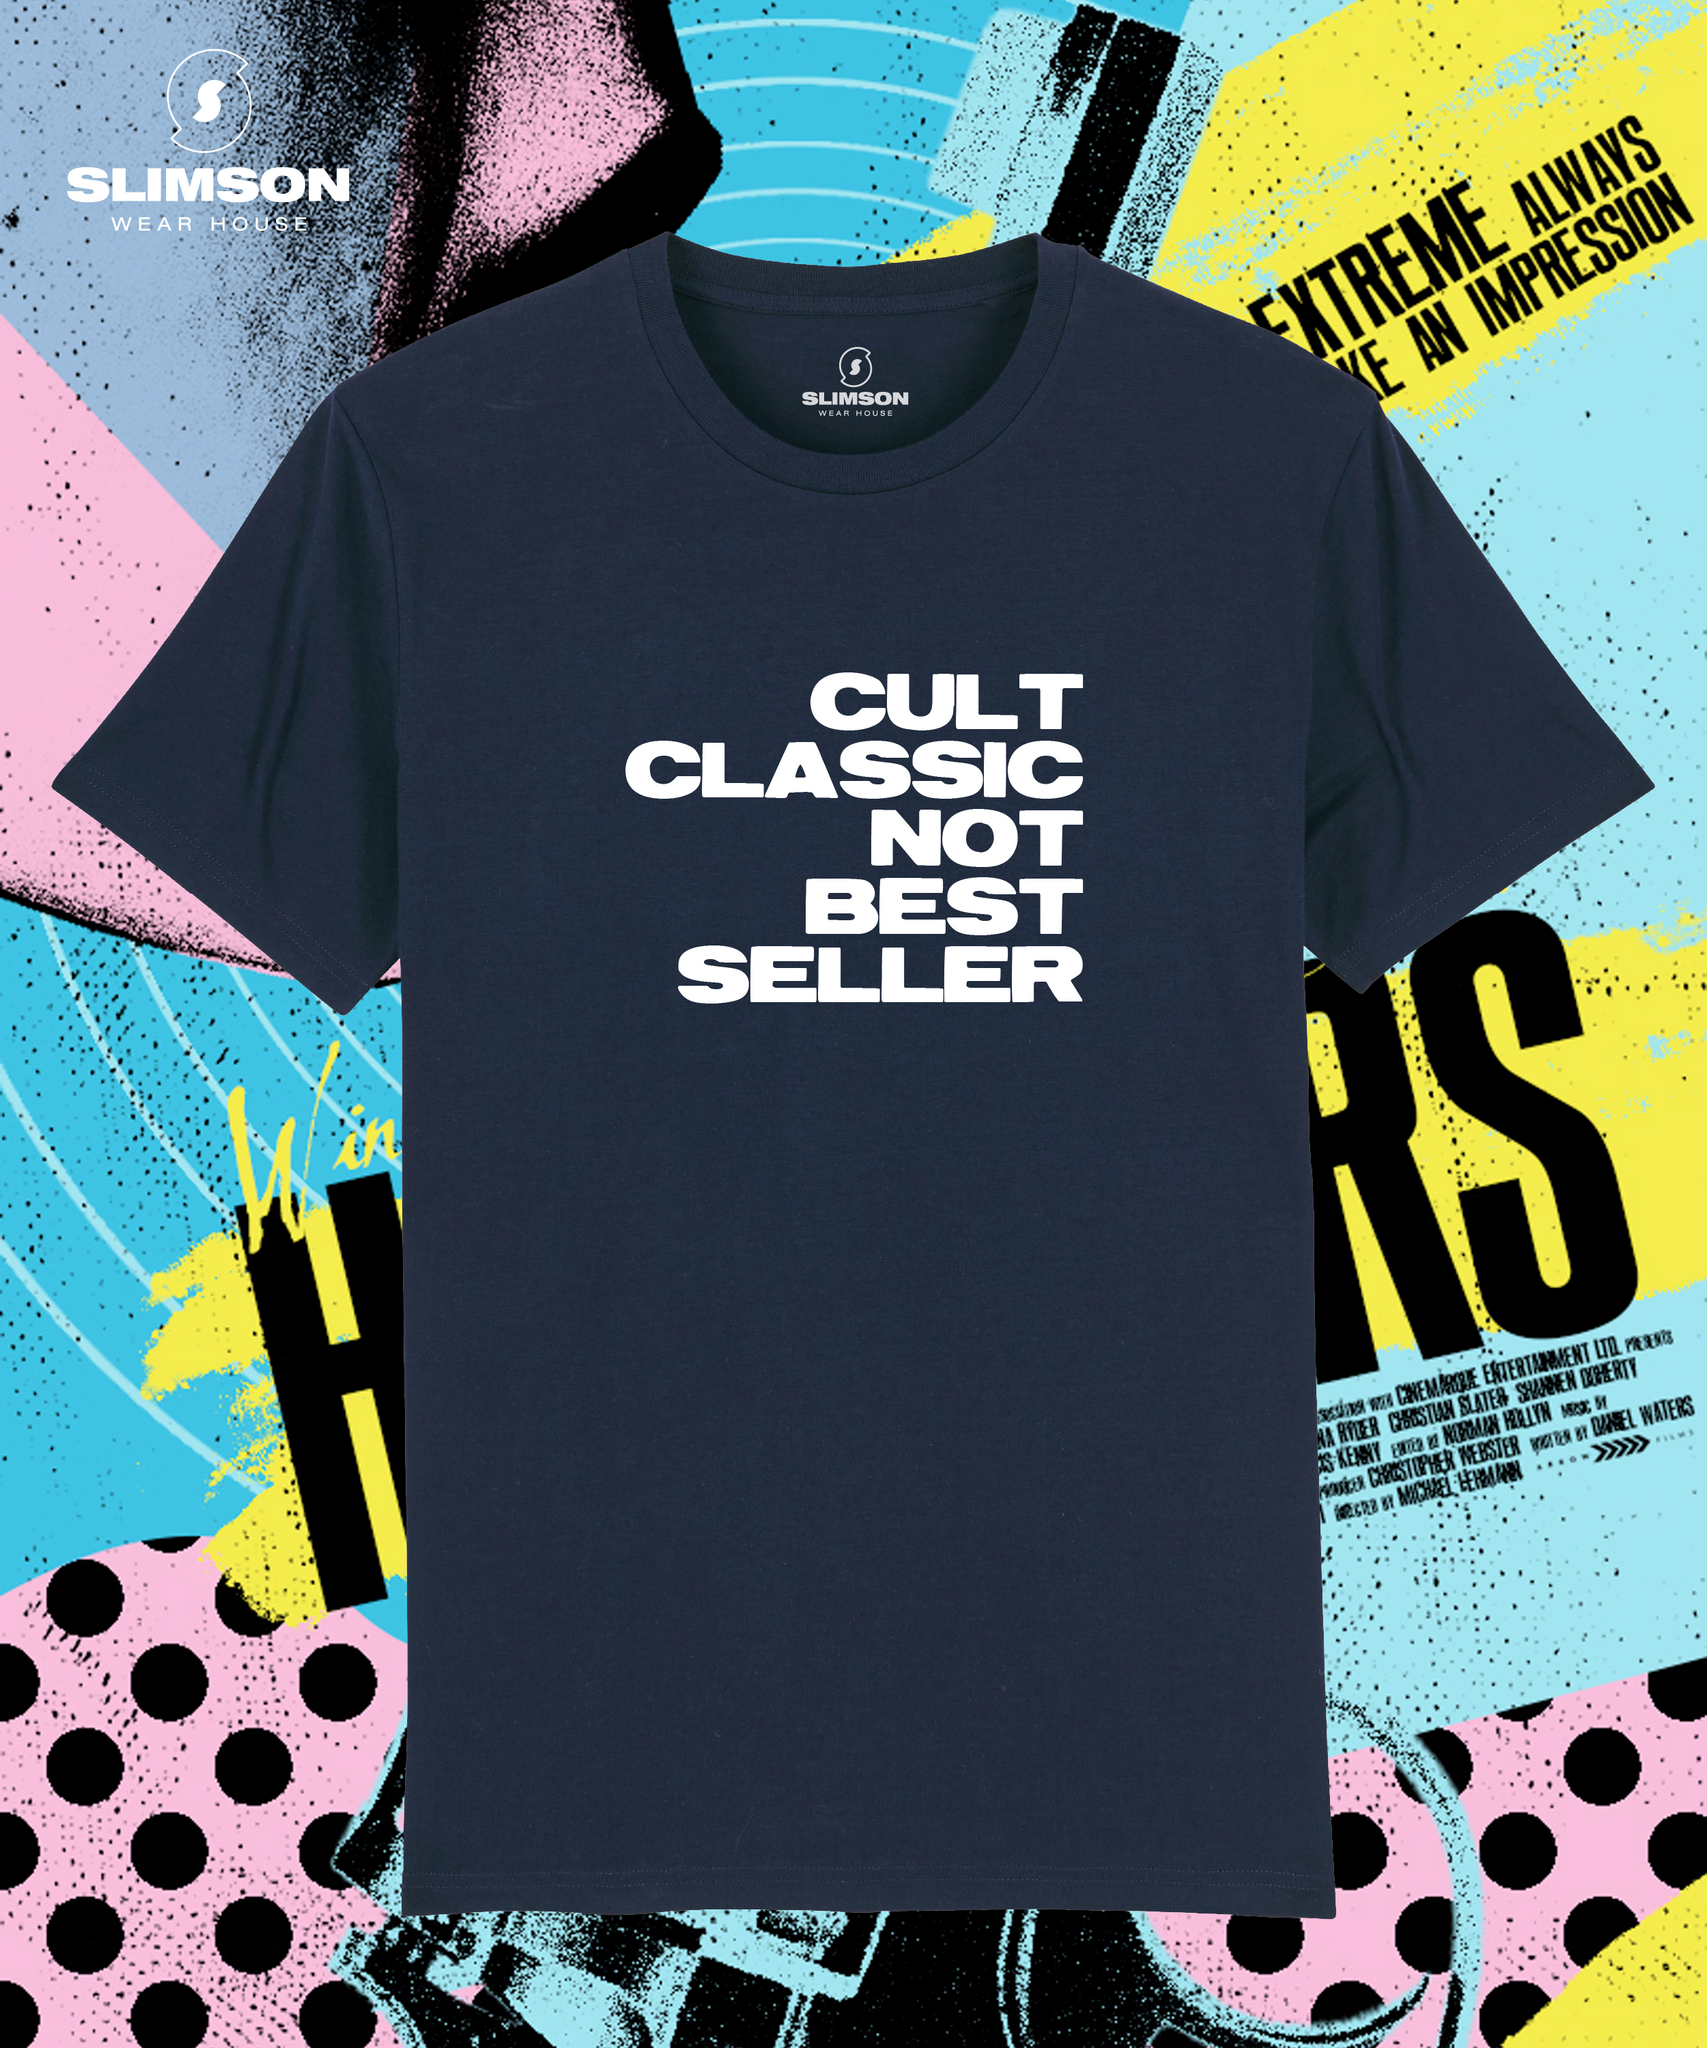 Cult Classic T-Shirt